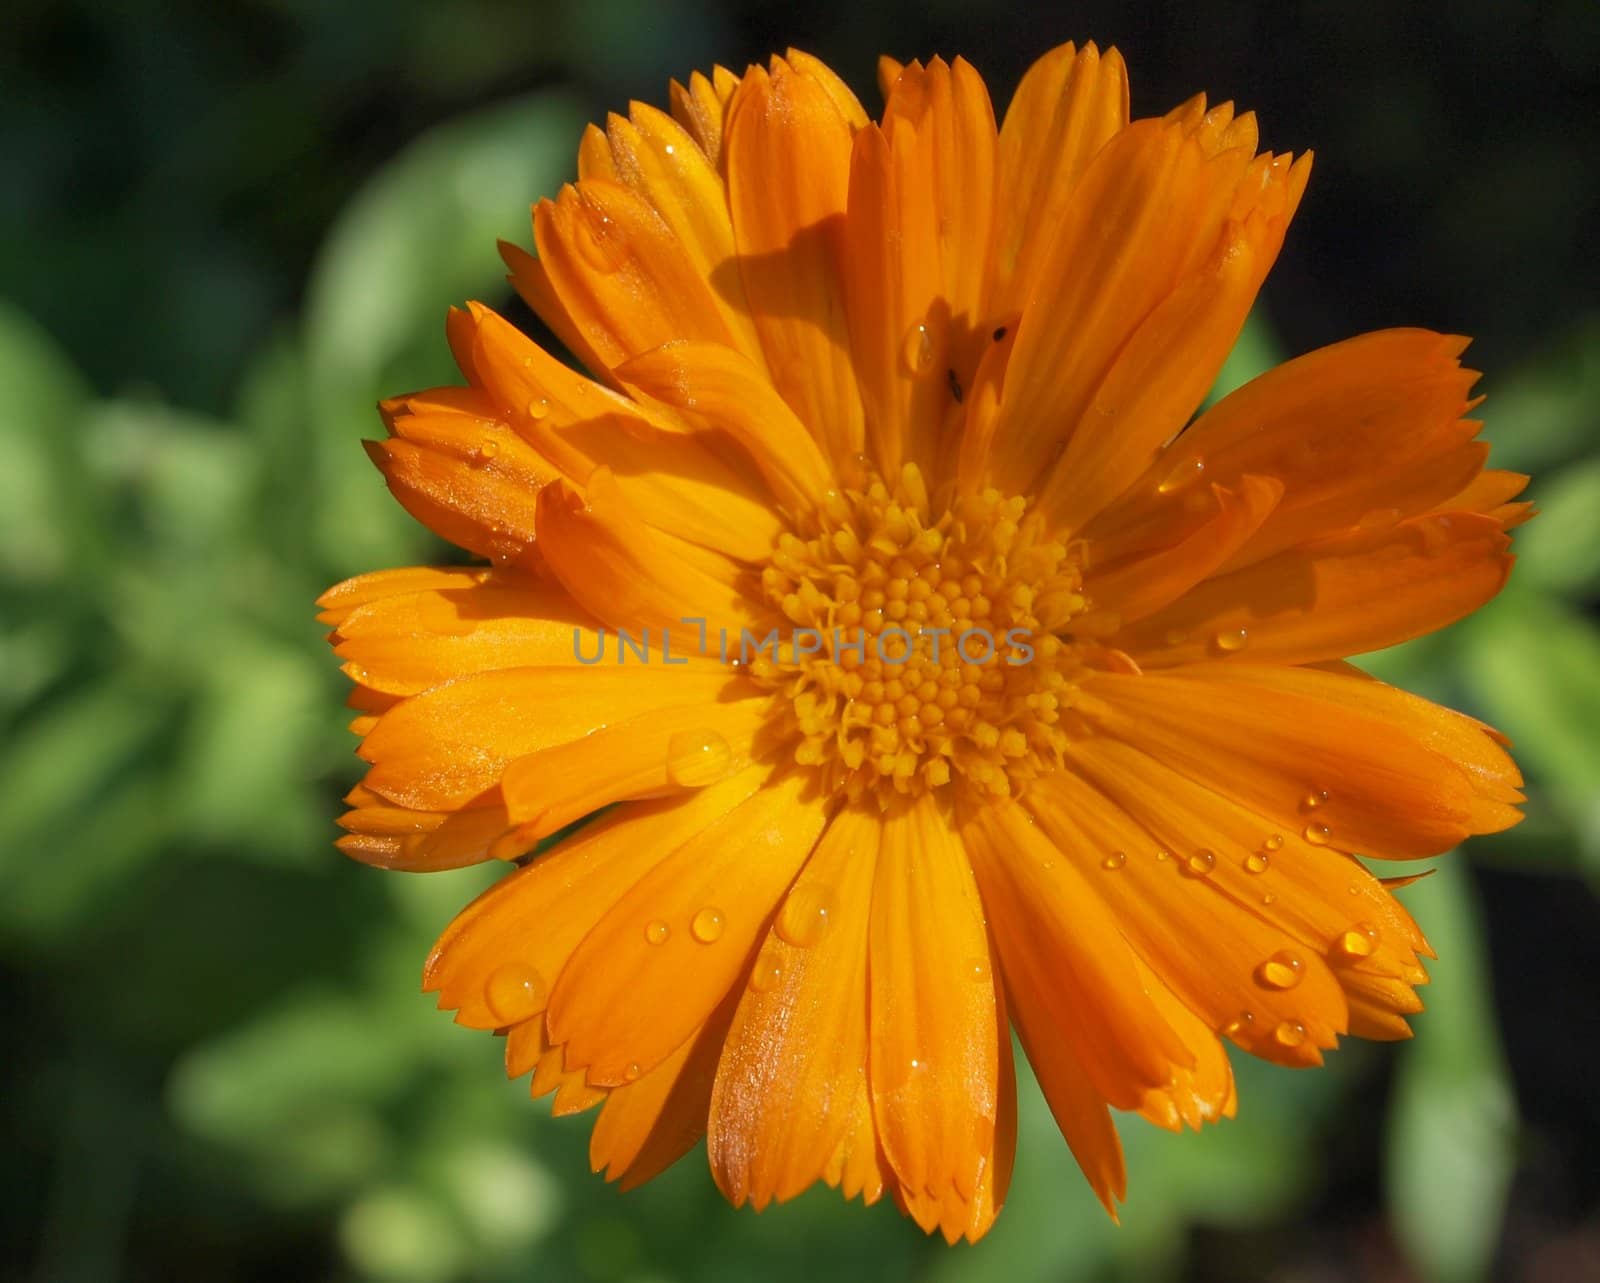 Medicinal marigold flower by Alminaite